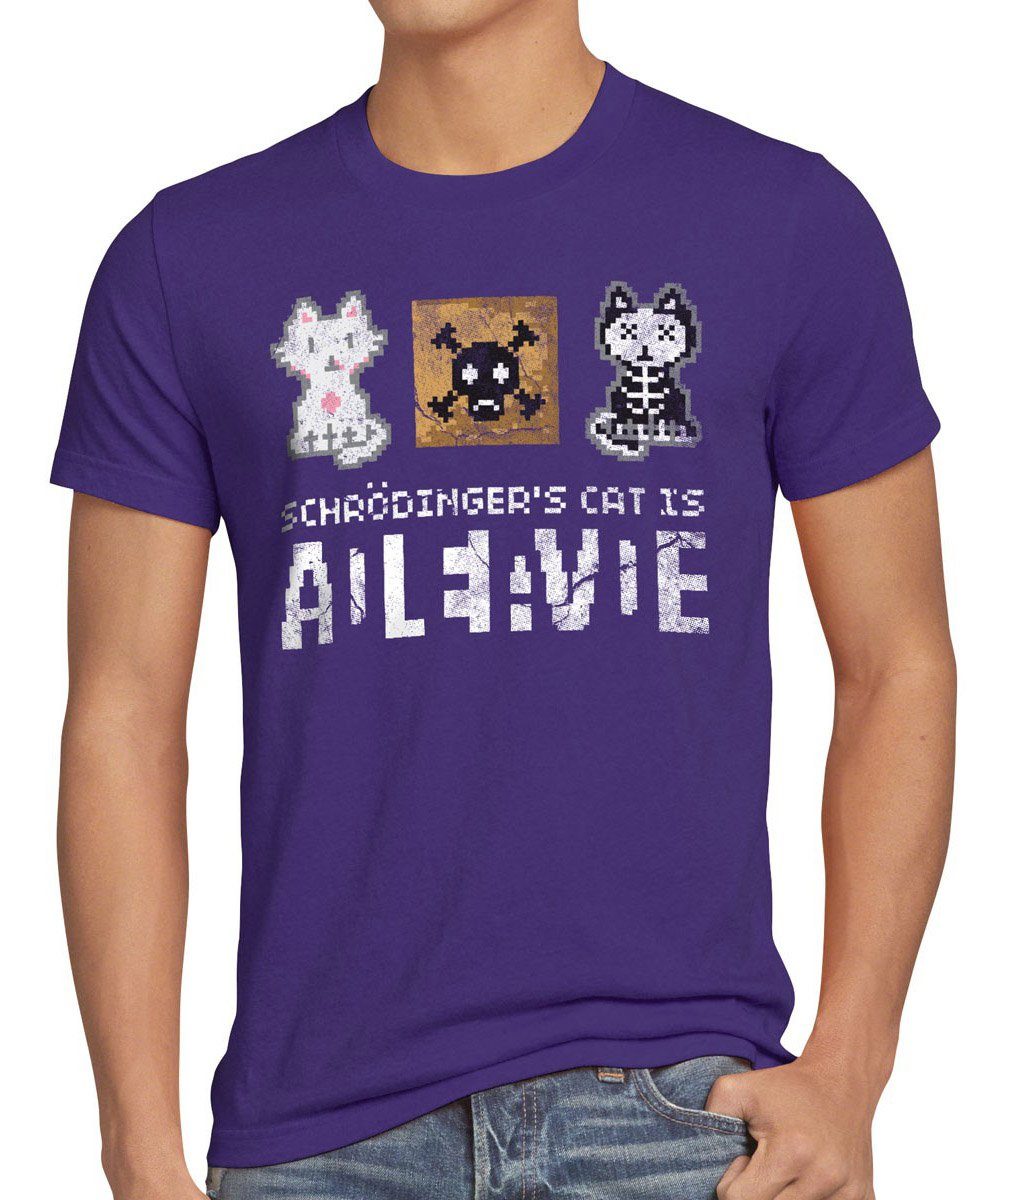 sheldon 8Bit Print-Shirt cat big schroedinger bang style3 Katze cooper Herren T-Shirt Schrödingers lila